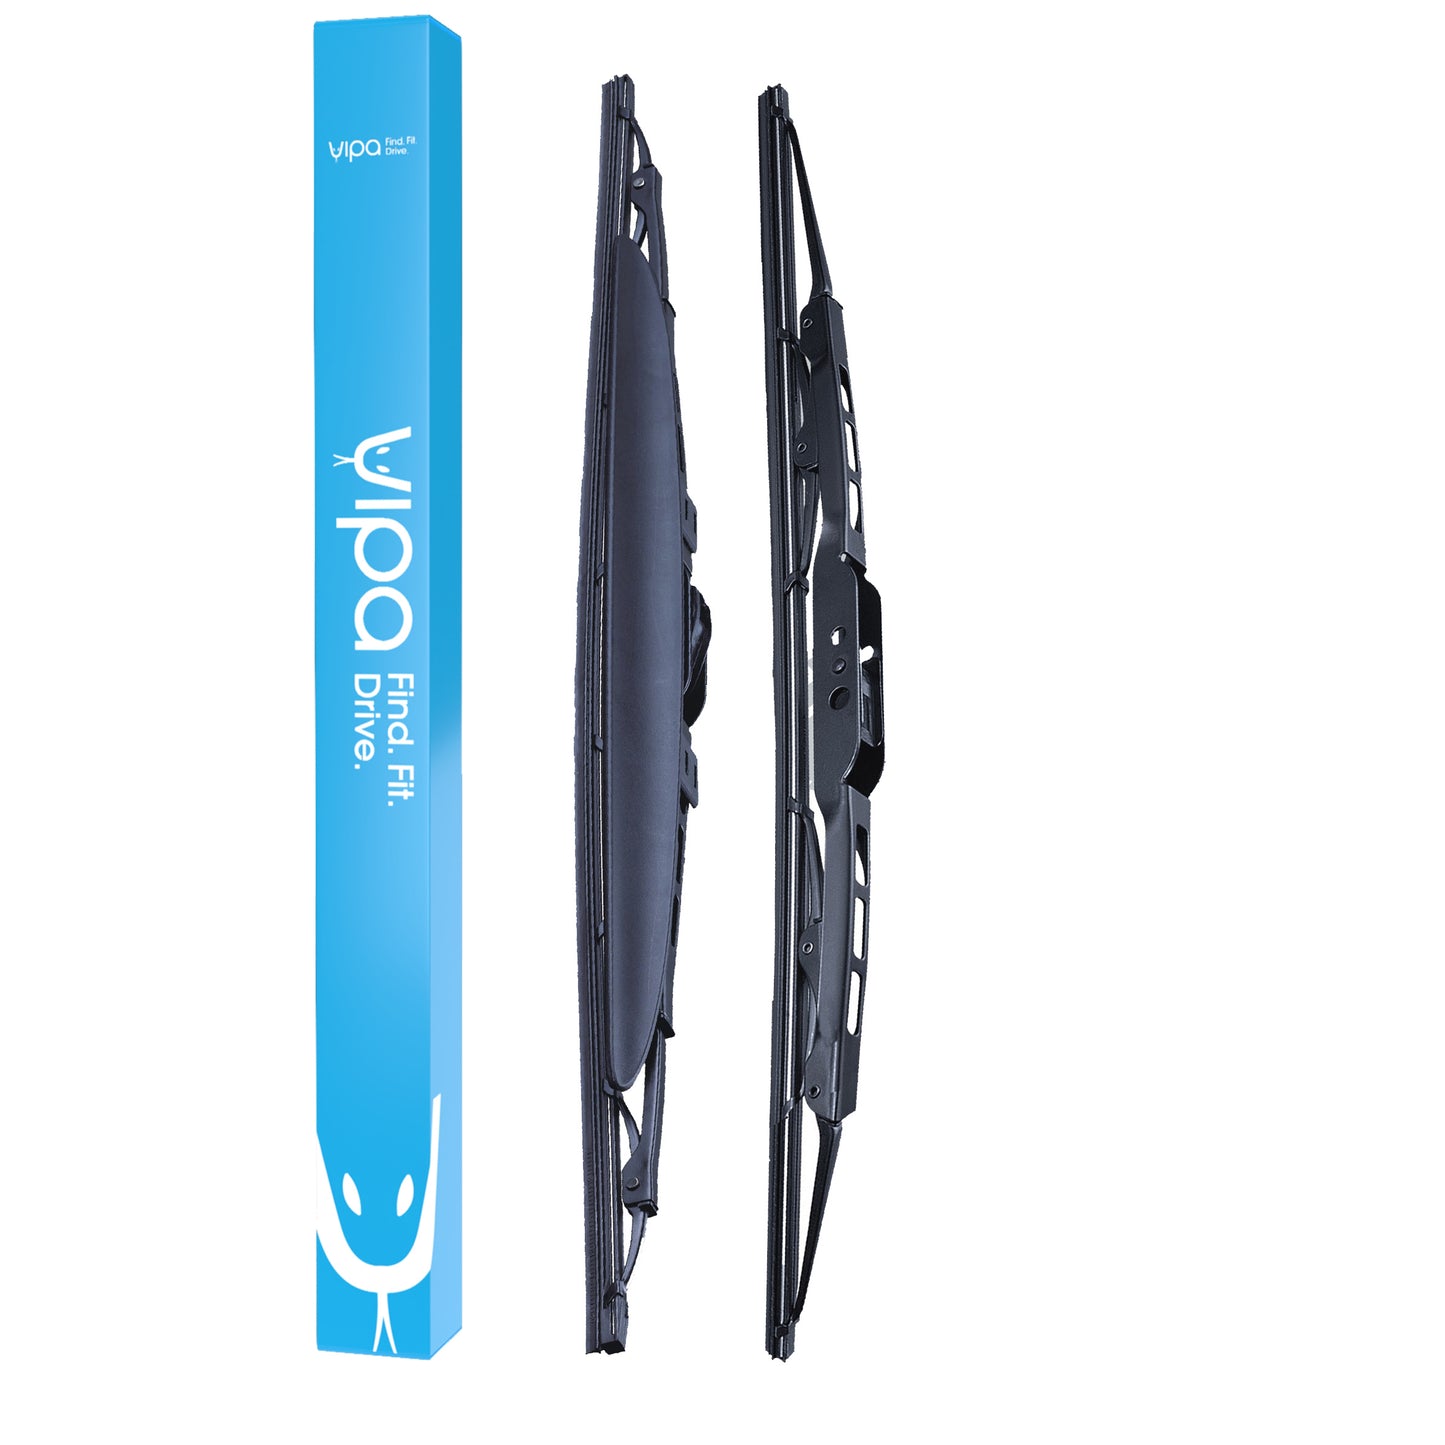 DACIA DUSTER Van Apr 2013 to Apr 2019 Wiper Blade Kit